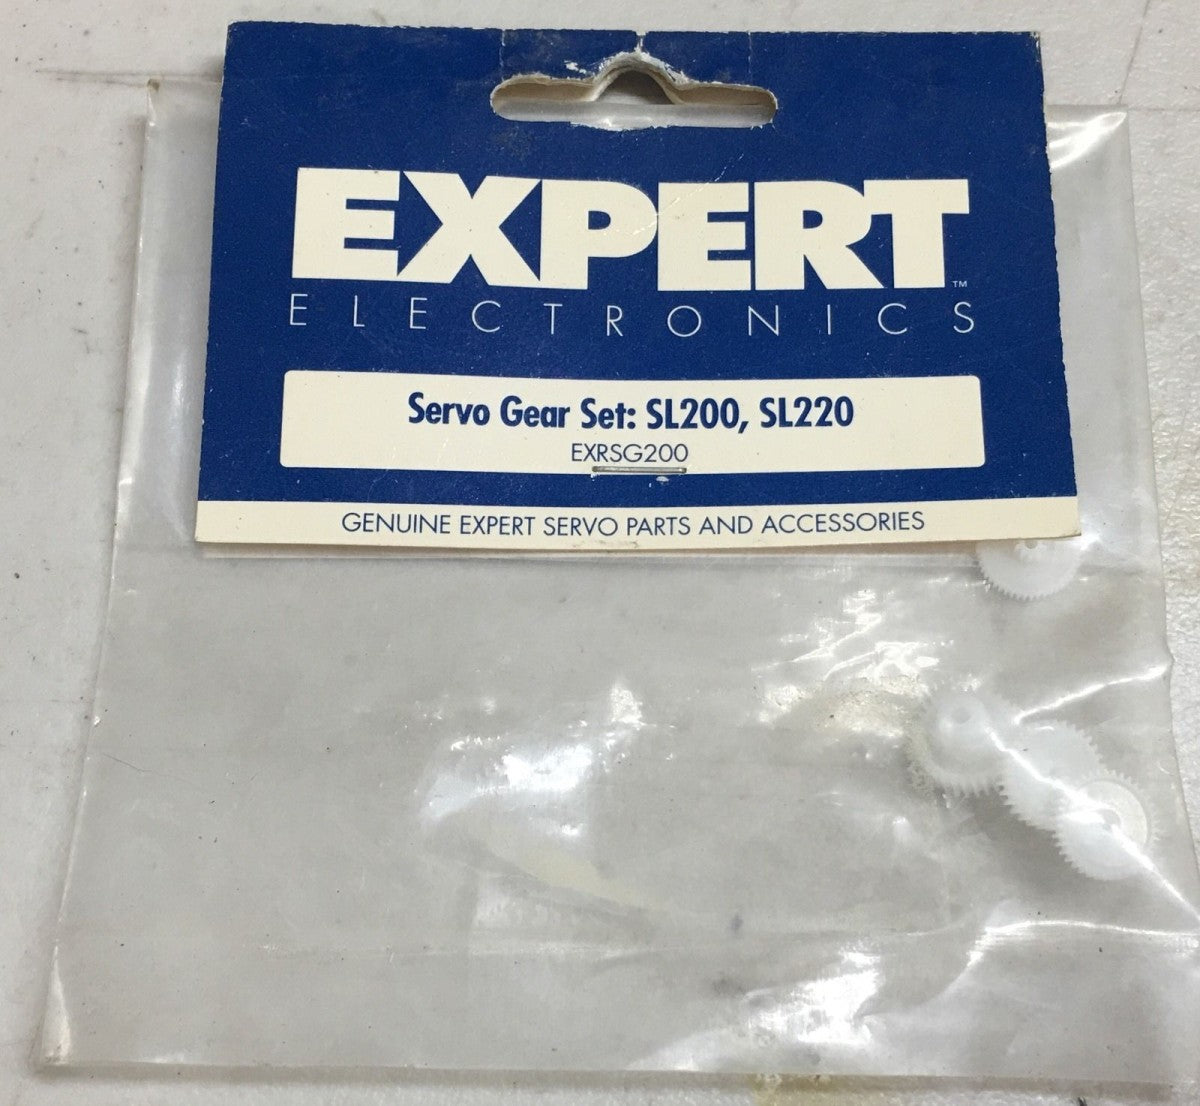 Expert Electronics EXRSG200 Servo Gear Set: SL200, SL220